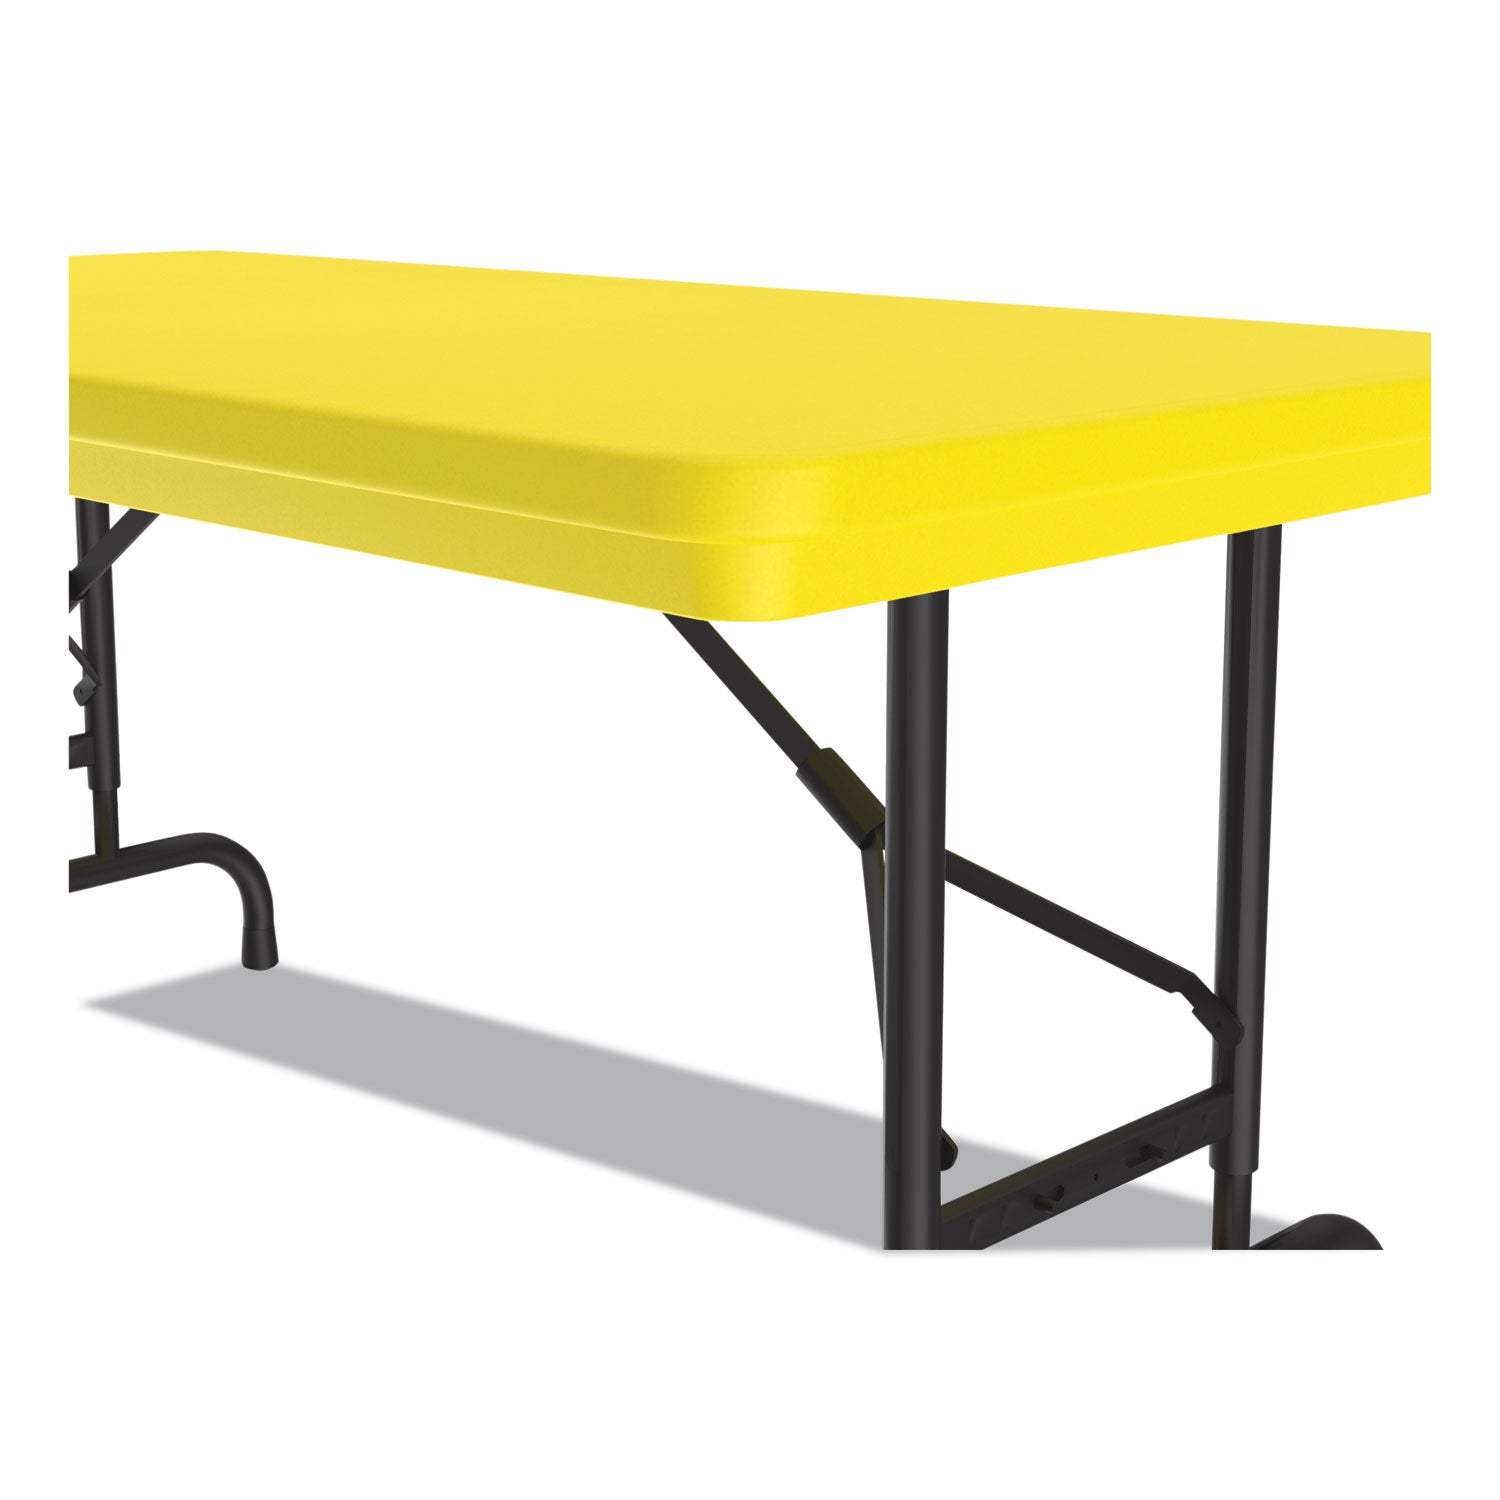 adjustable-folding-table-rectangular-48-x-24-x-22-to-32-yellow-top-black-legs-4-pallet-ships-in-4-6-business-days_crlra2448284p - 6